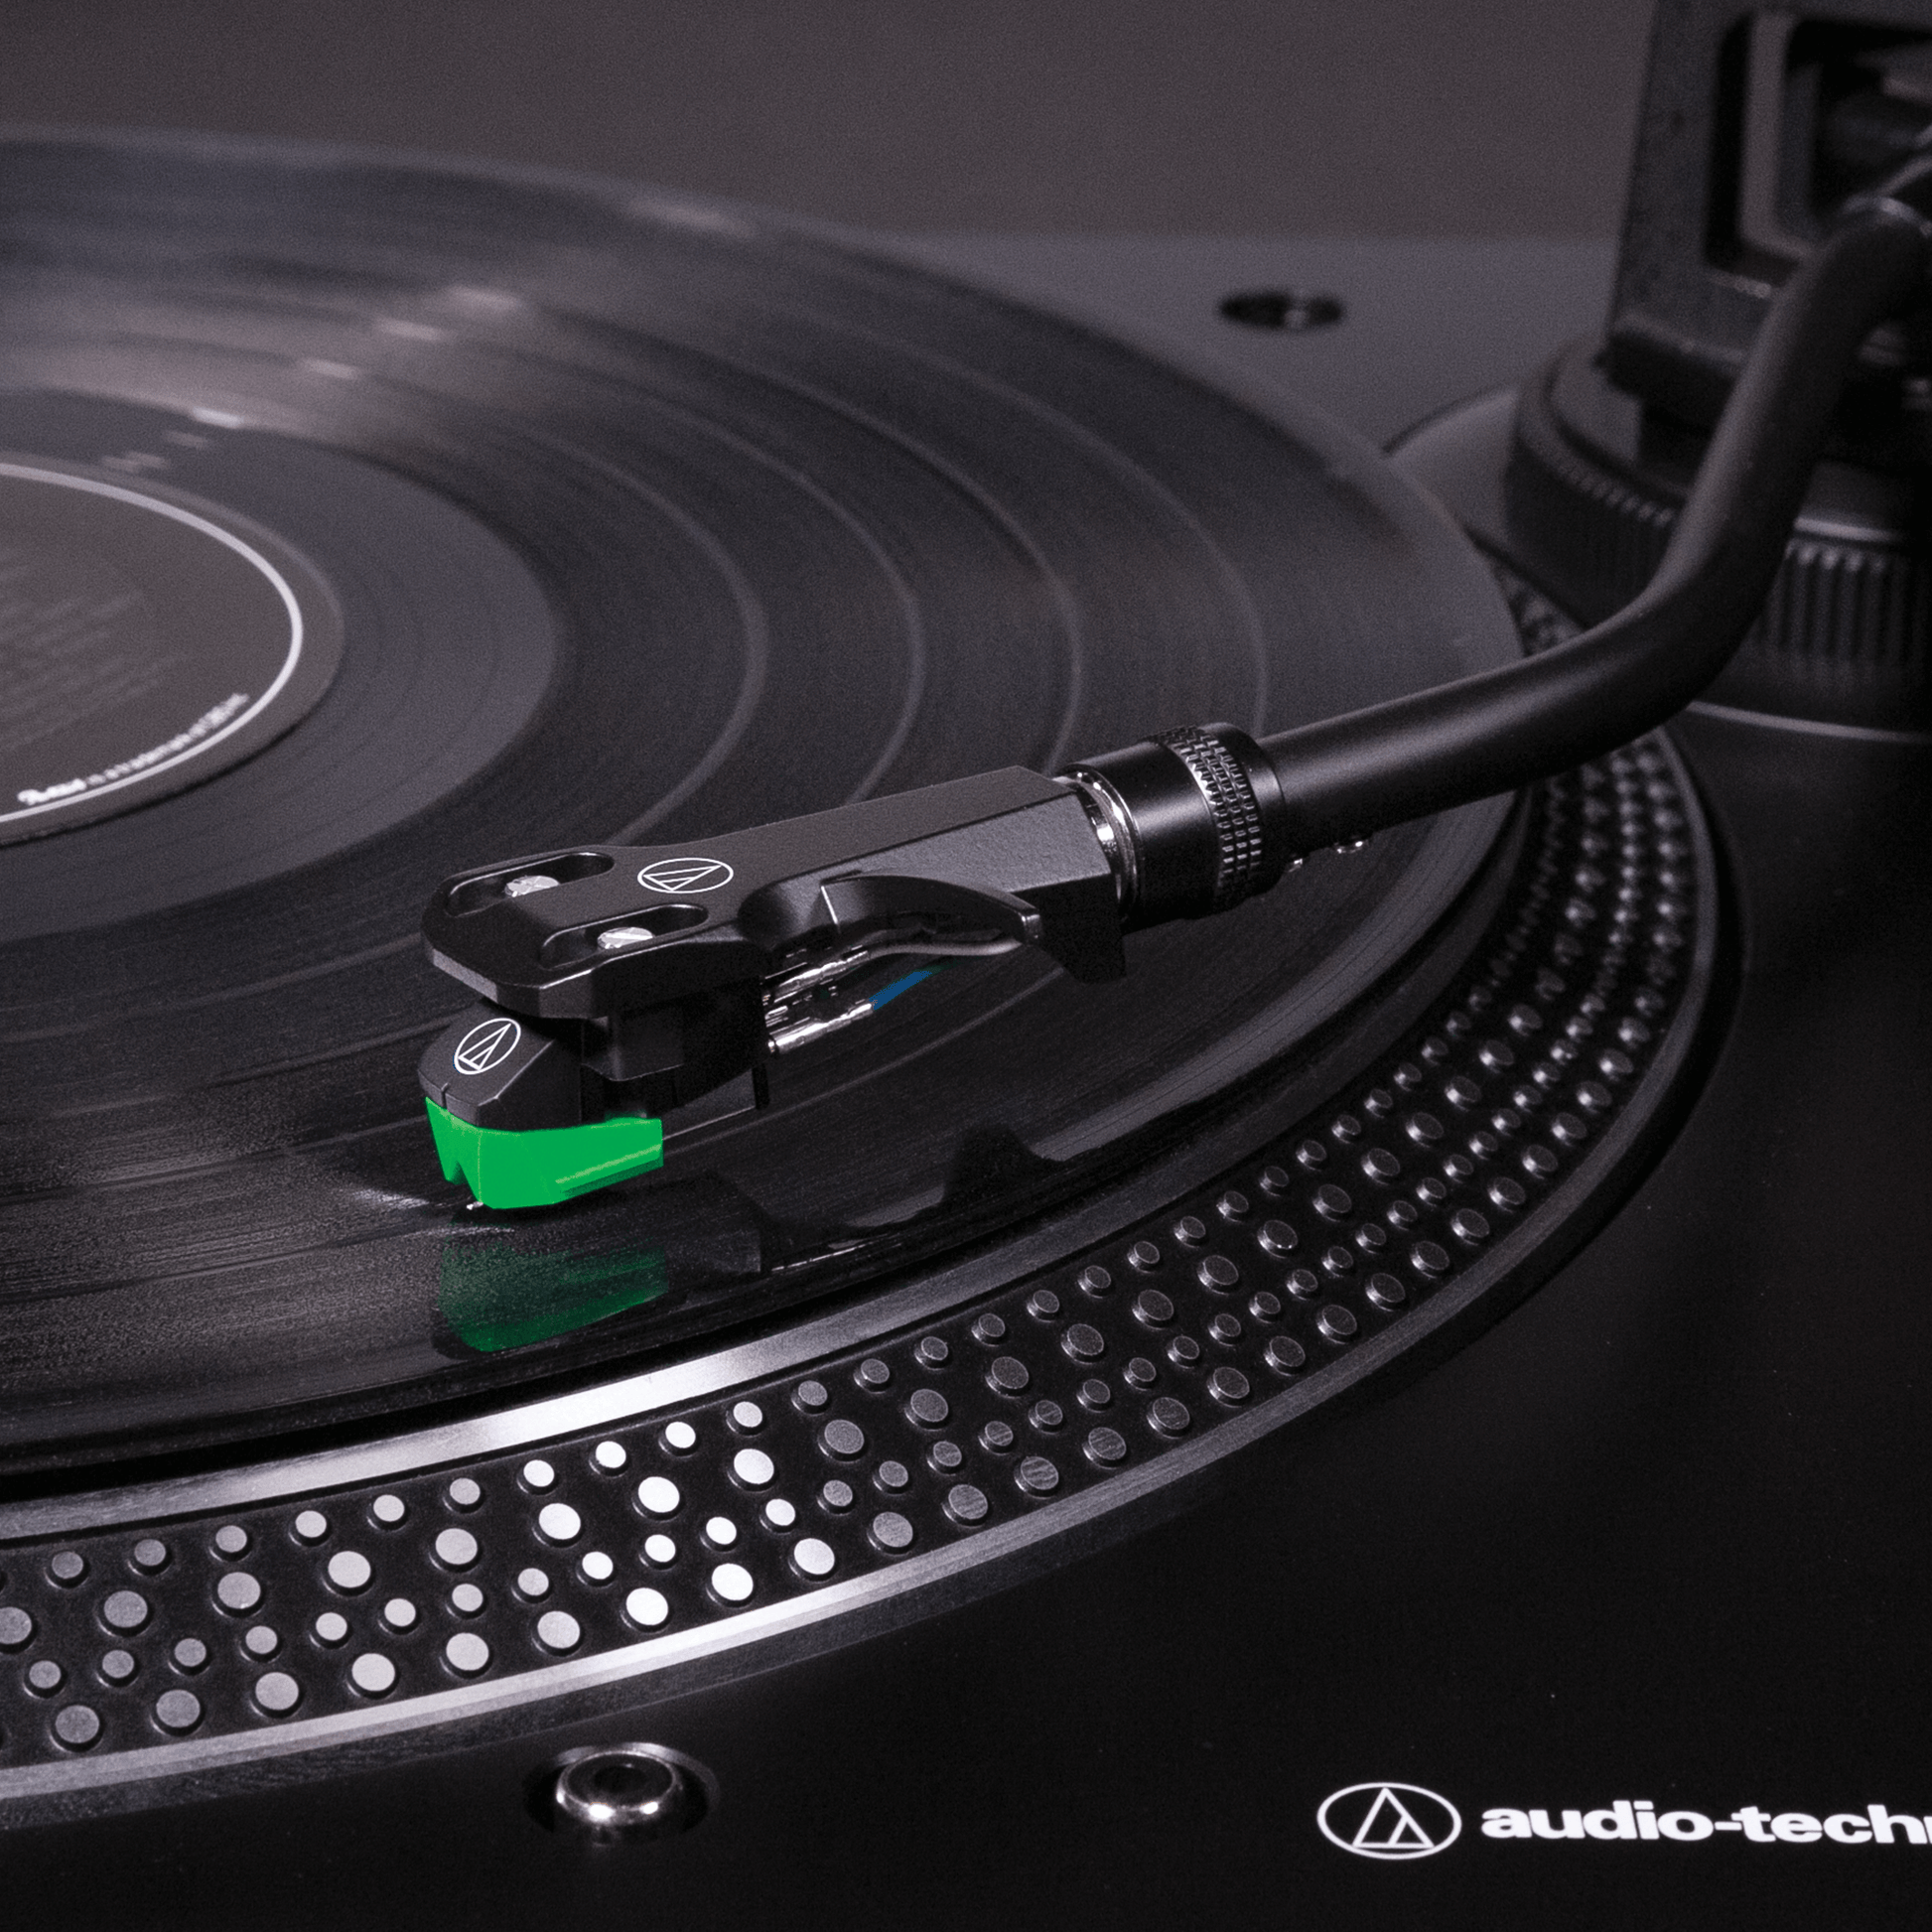 AT-LP120XUSBBK-Turntables & Record Players-Audio-Technica-PremiumHIFI